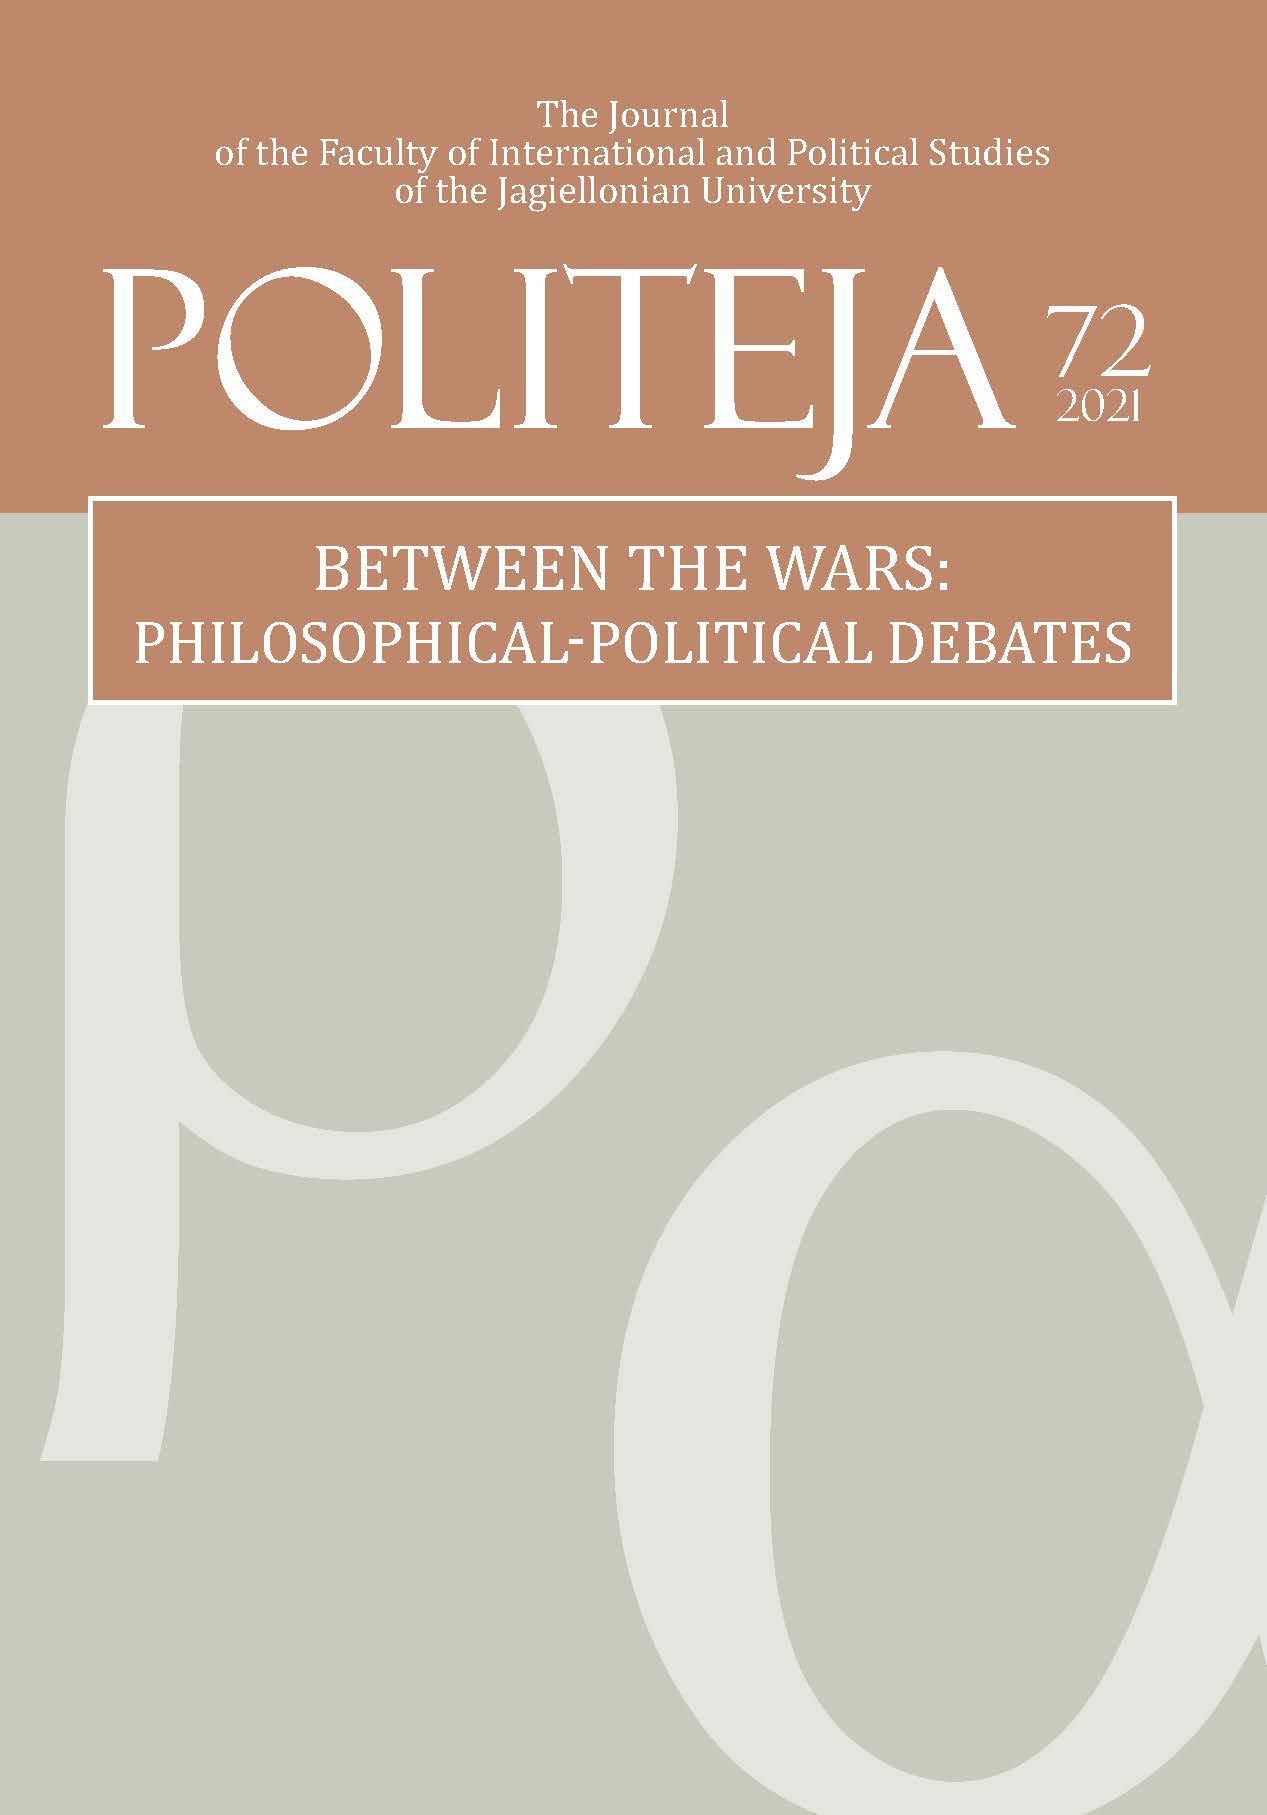 					View Vol. 18 No. 3(72) (2021): Between The Wars: Philosophical-Political Debates
				